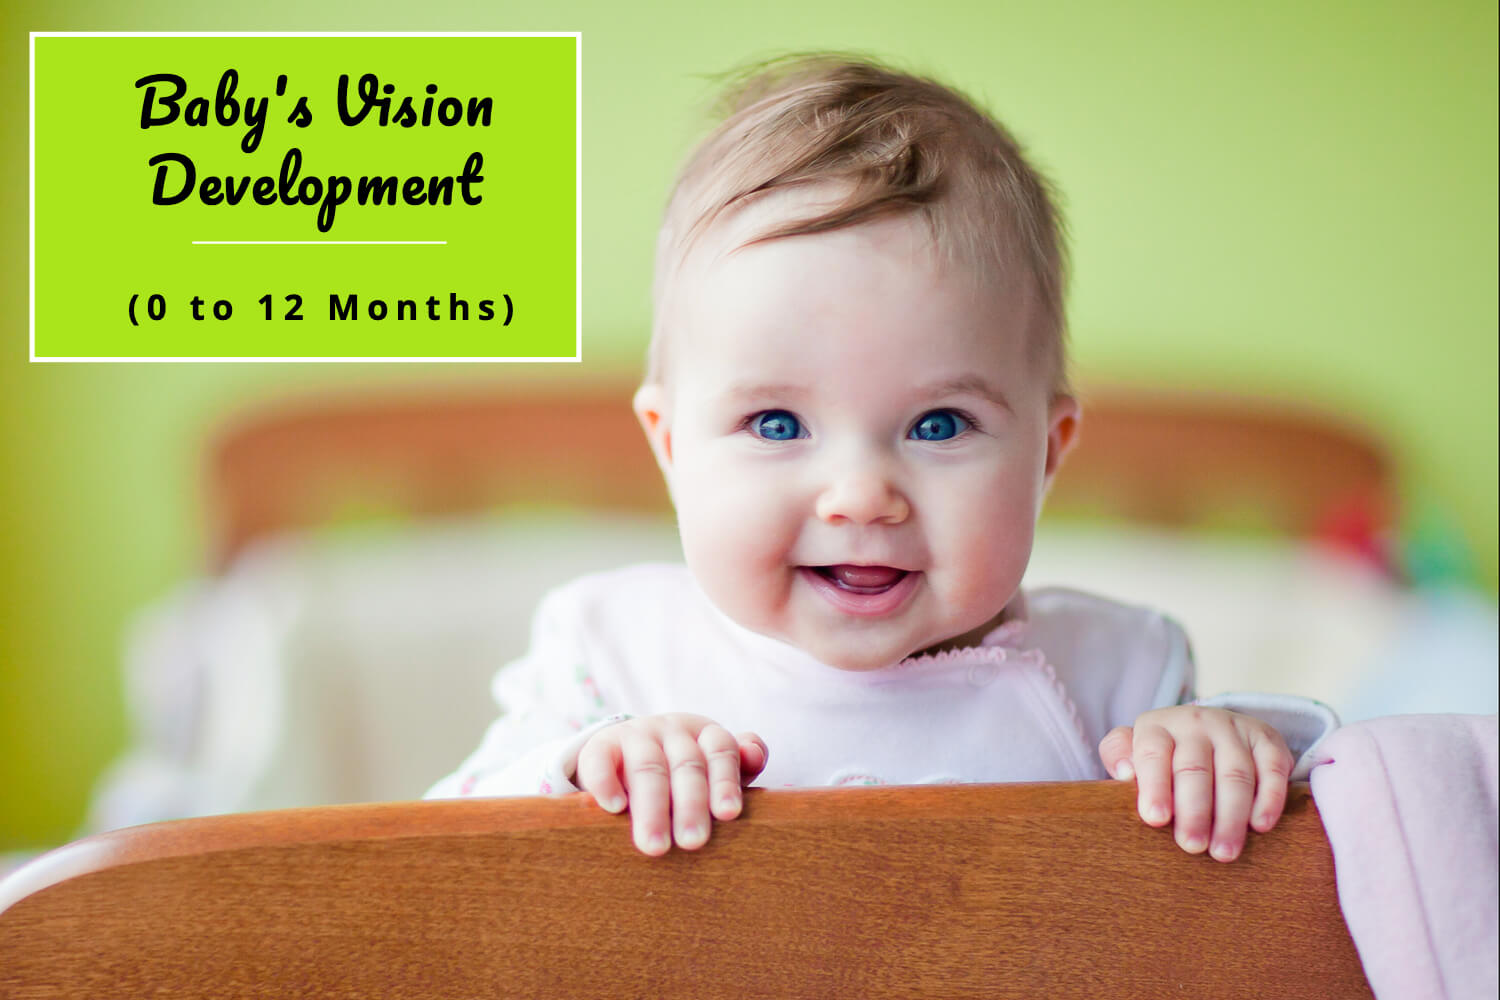 Baby's Vision Development